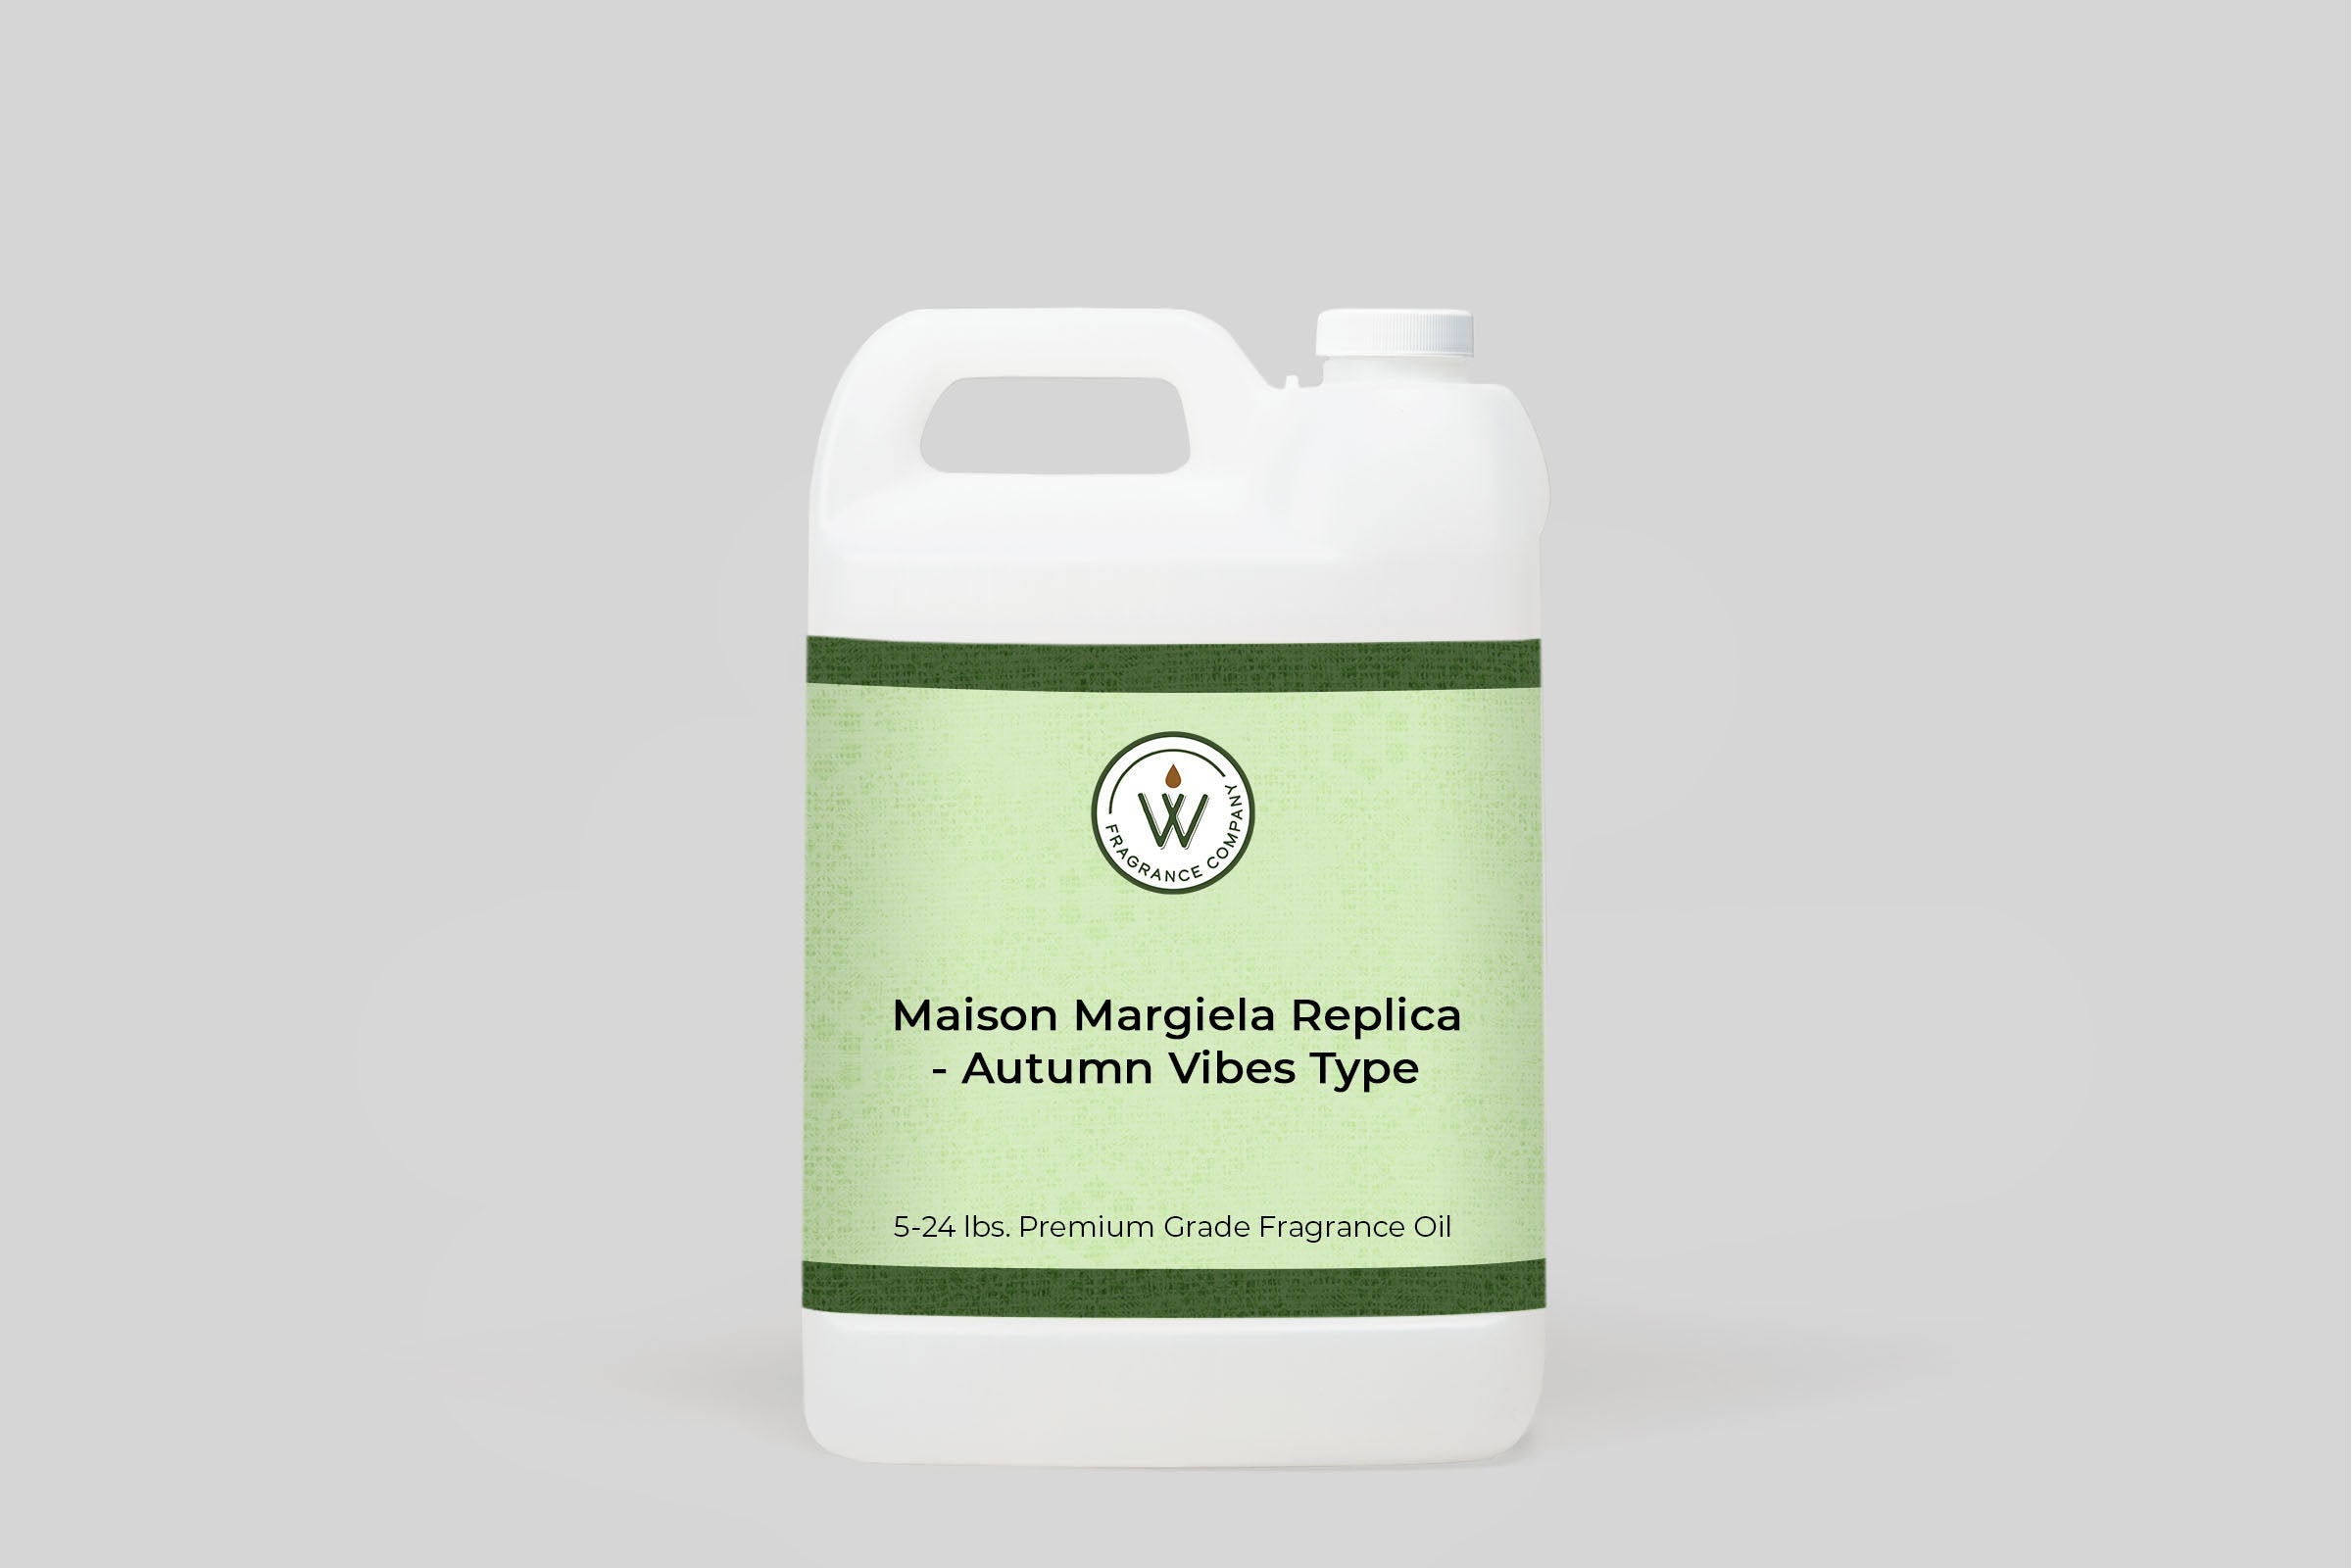 Maison Margiela Replica - Autumn Vibes Type Fragrance Oil